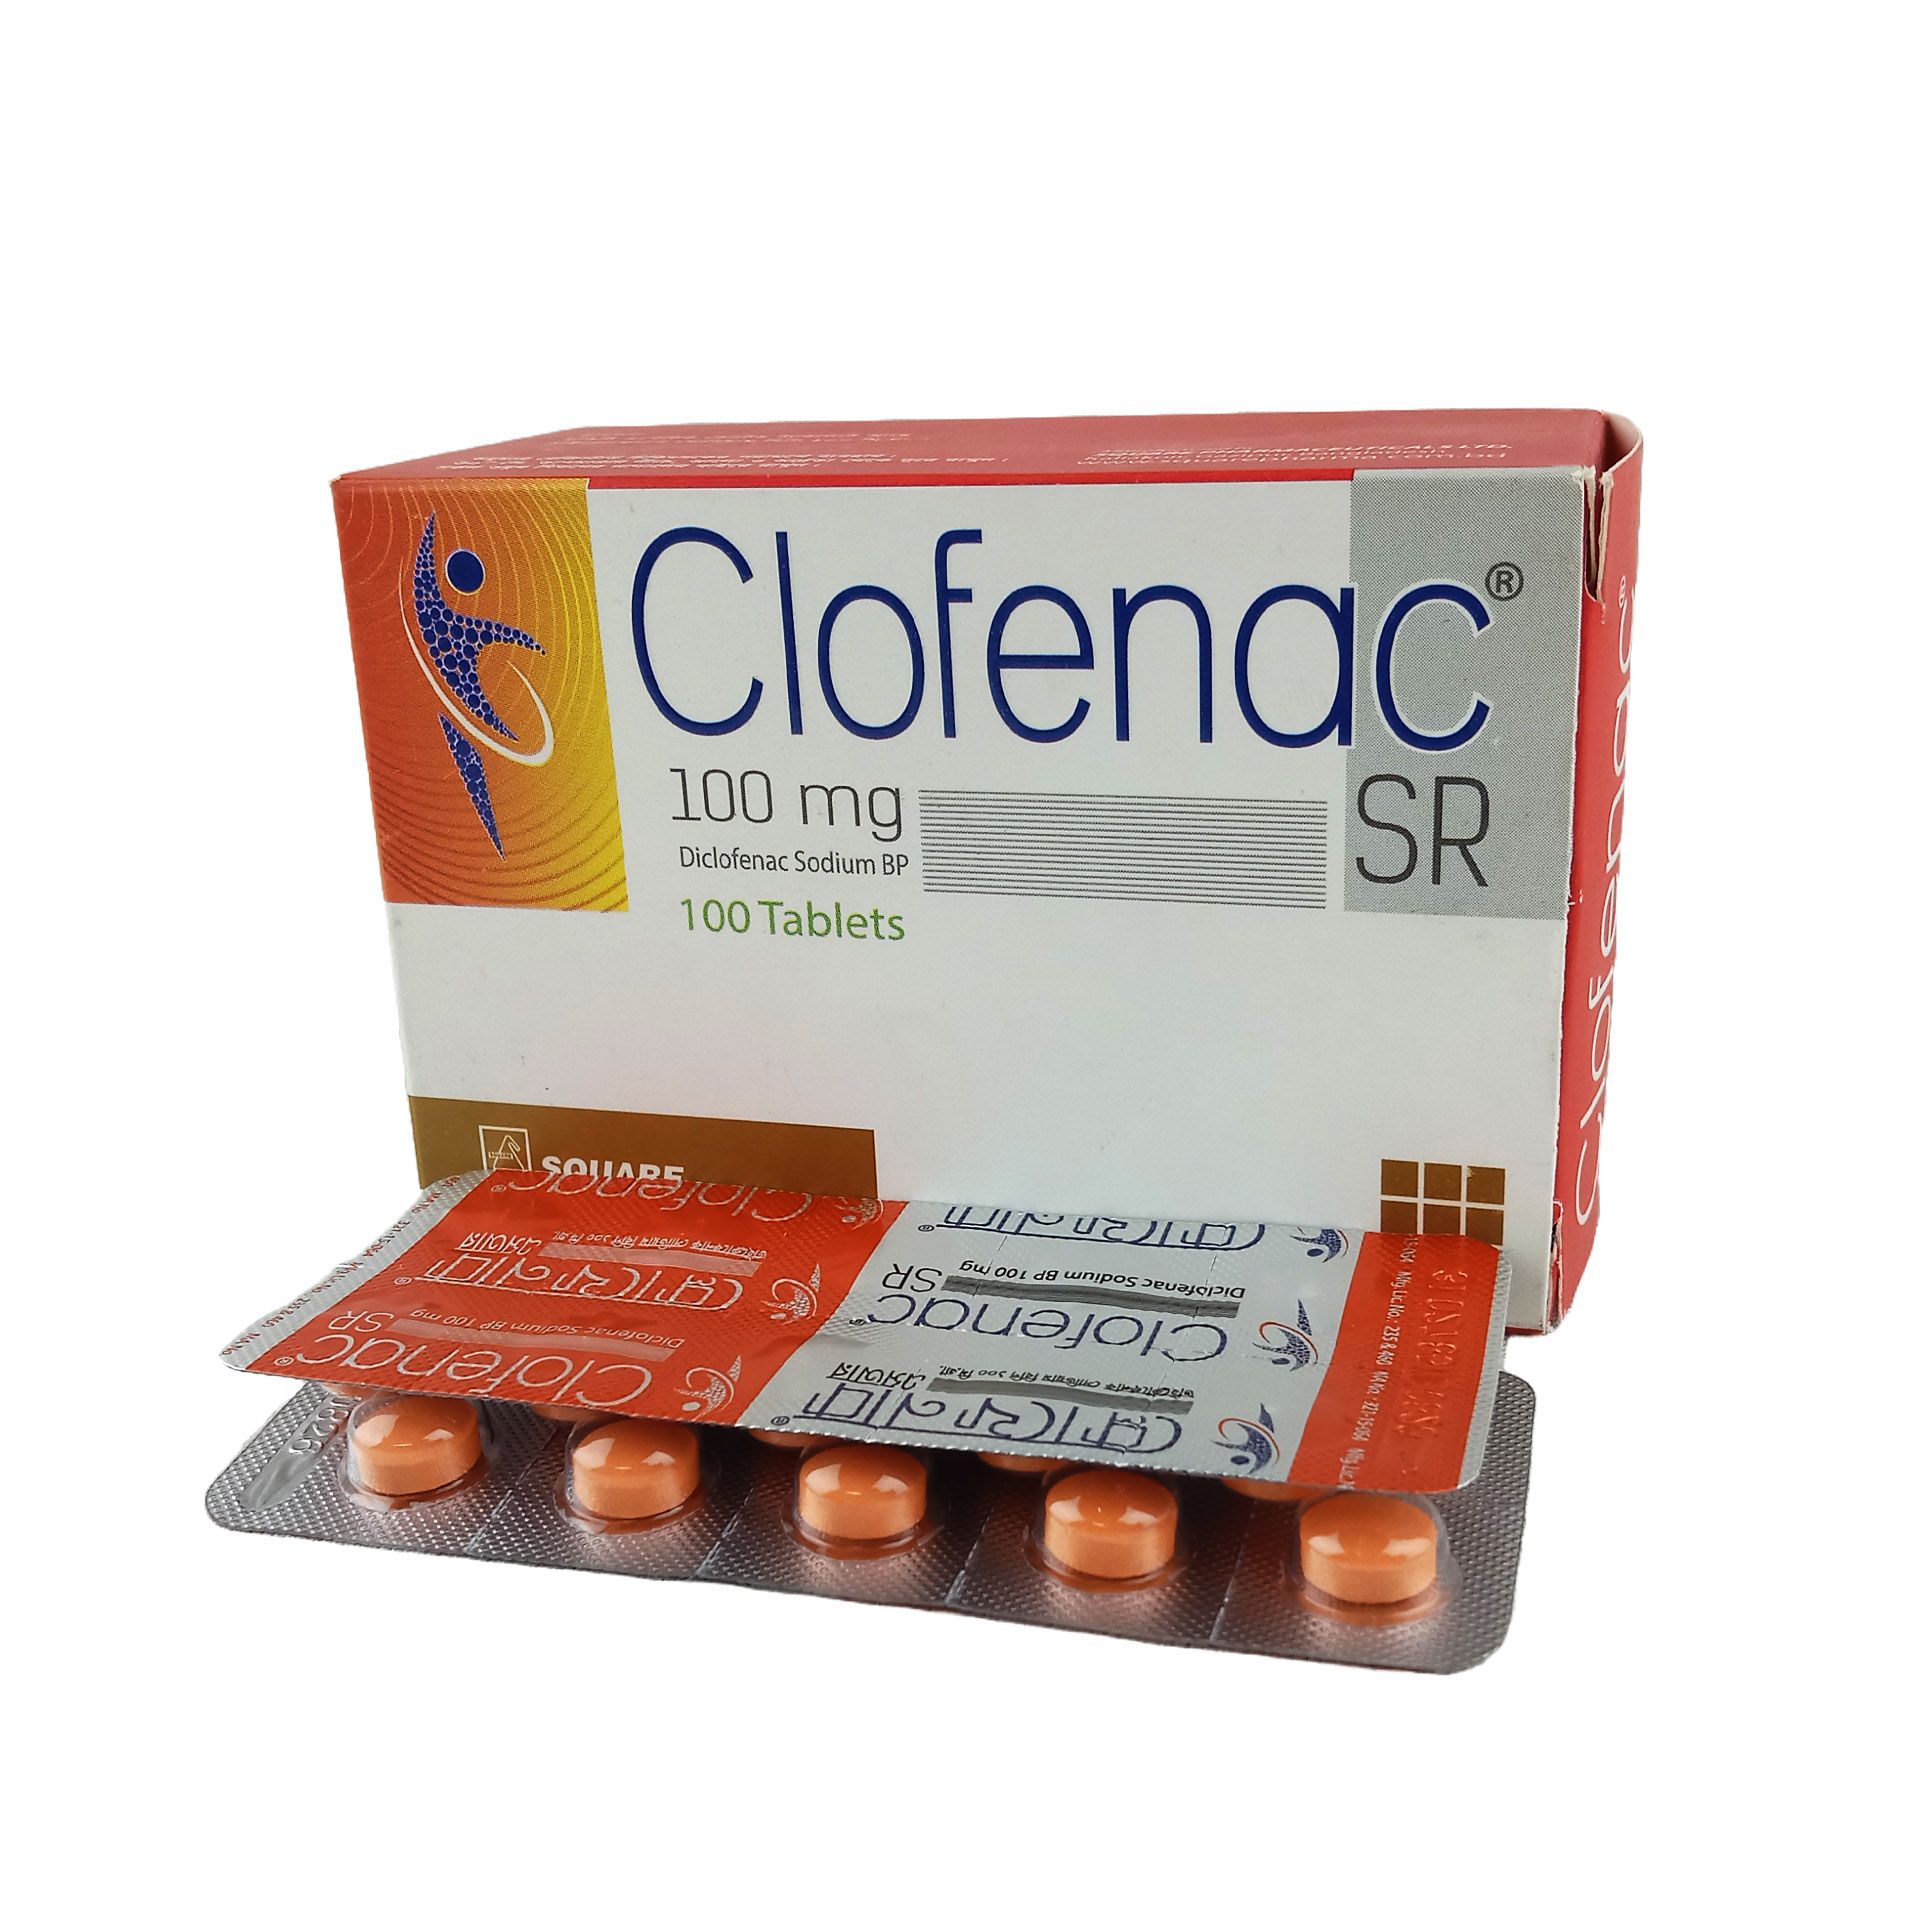 Clofenac SR 100mg Tablet